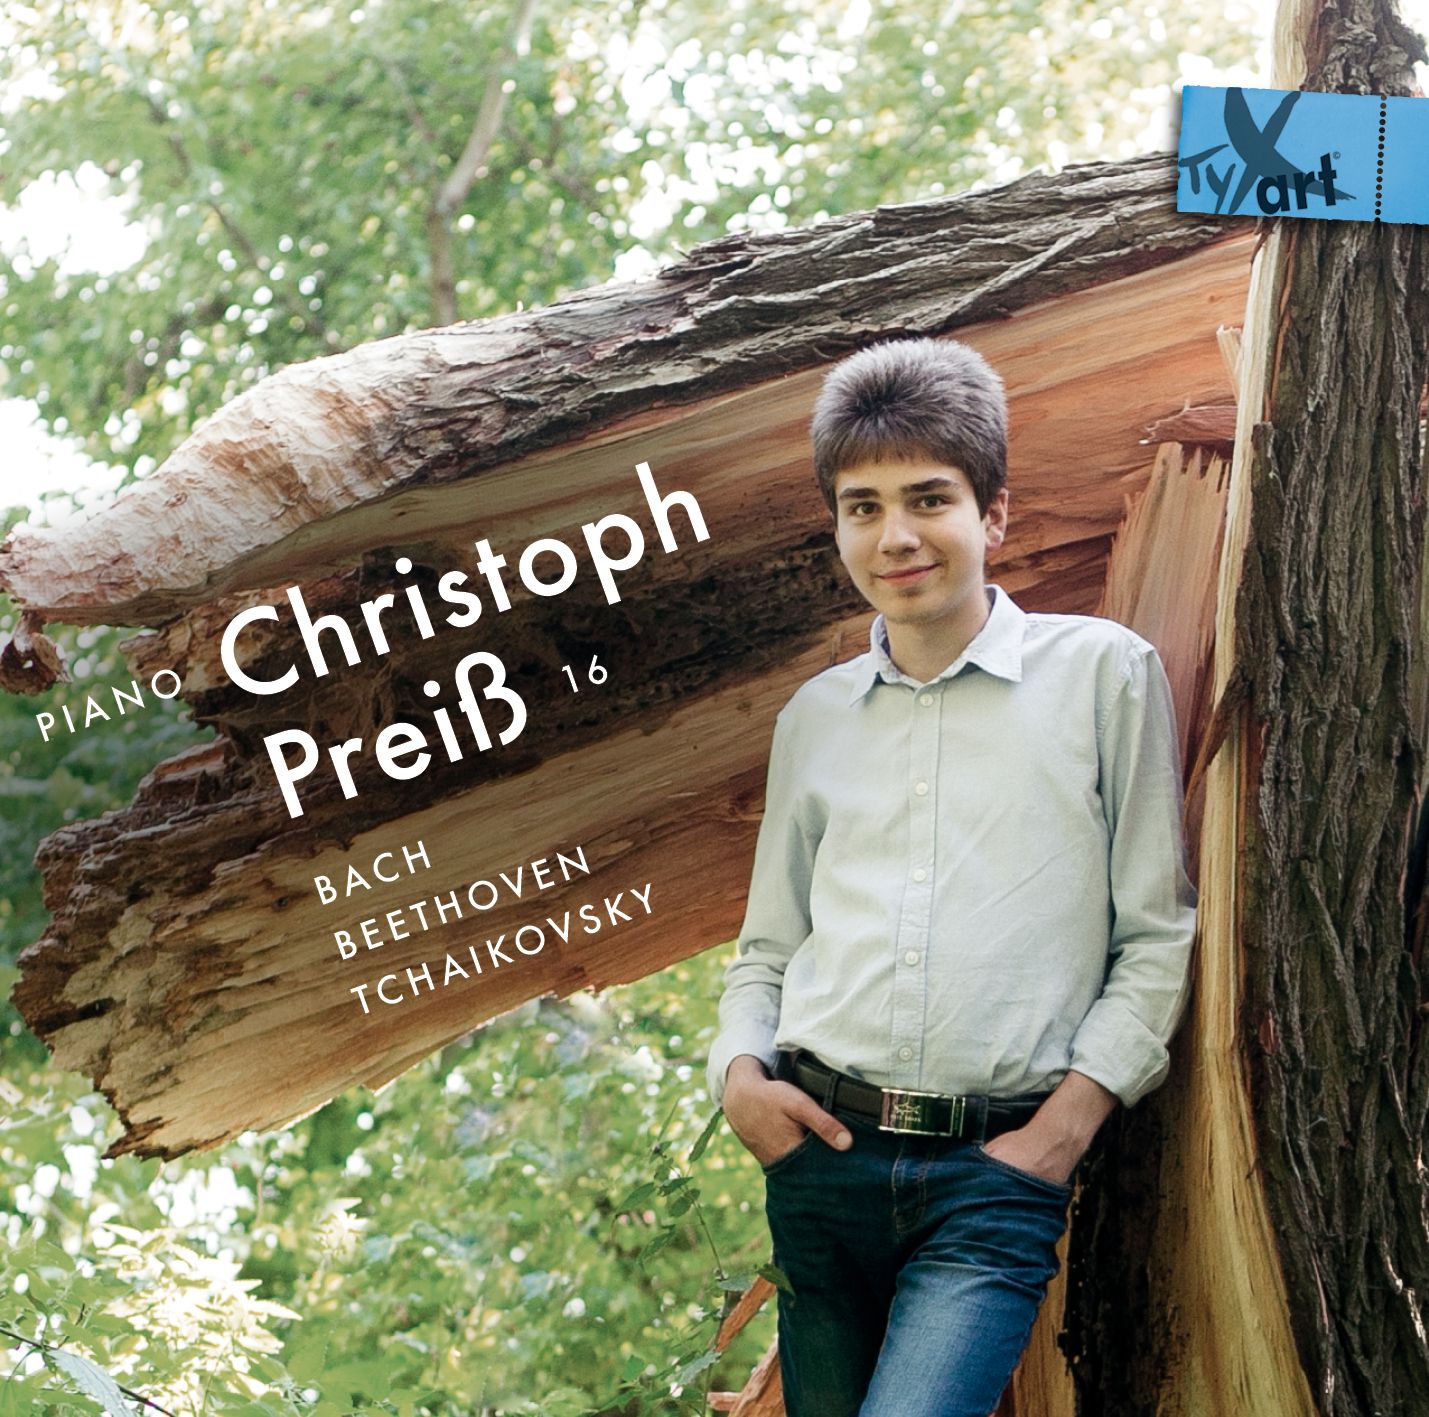 Christoph Preiß, 16, Piano: Bach, Beethoven, Tschaikowsky